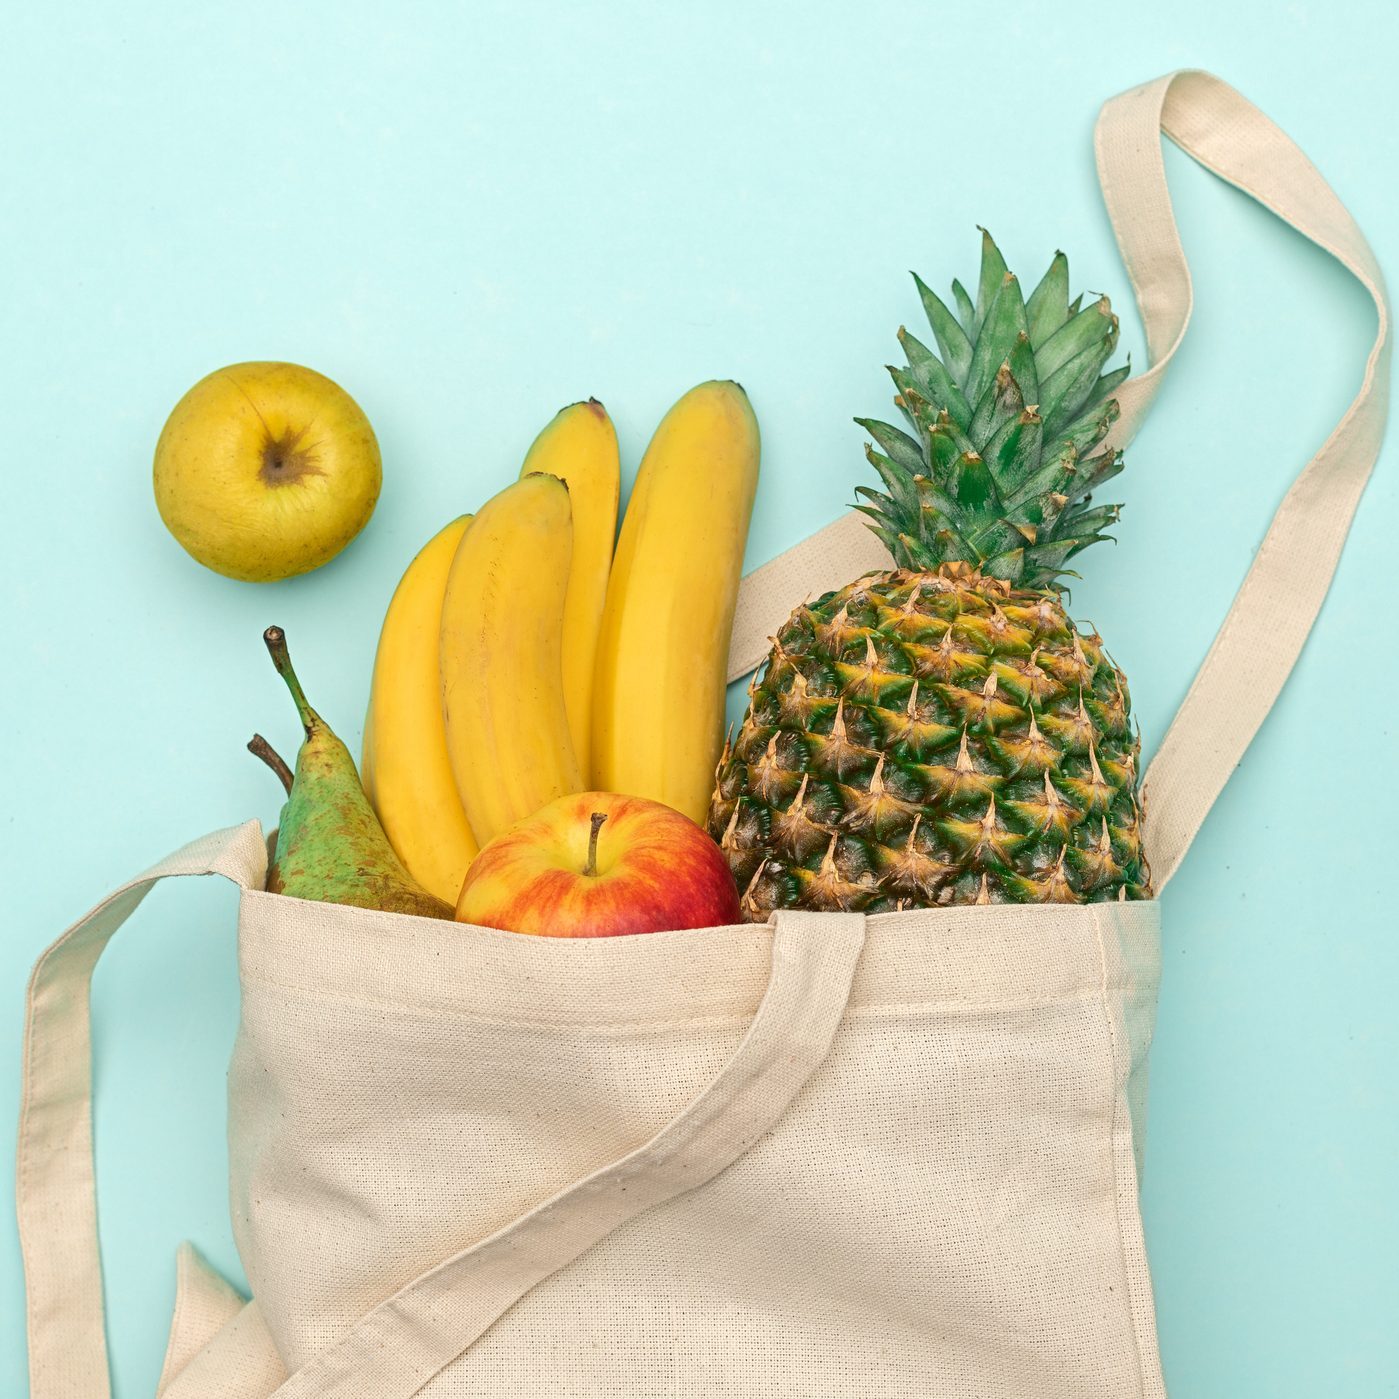 Apple Bags, Mini Zips, Clear Apple Bags, Apple Bag Colors